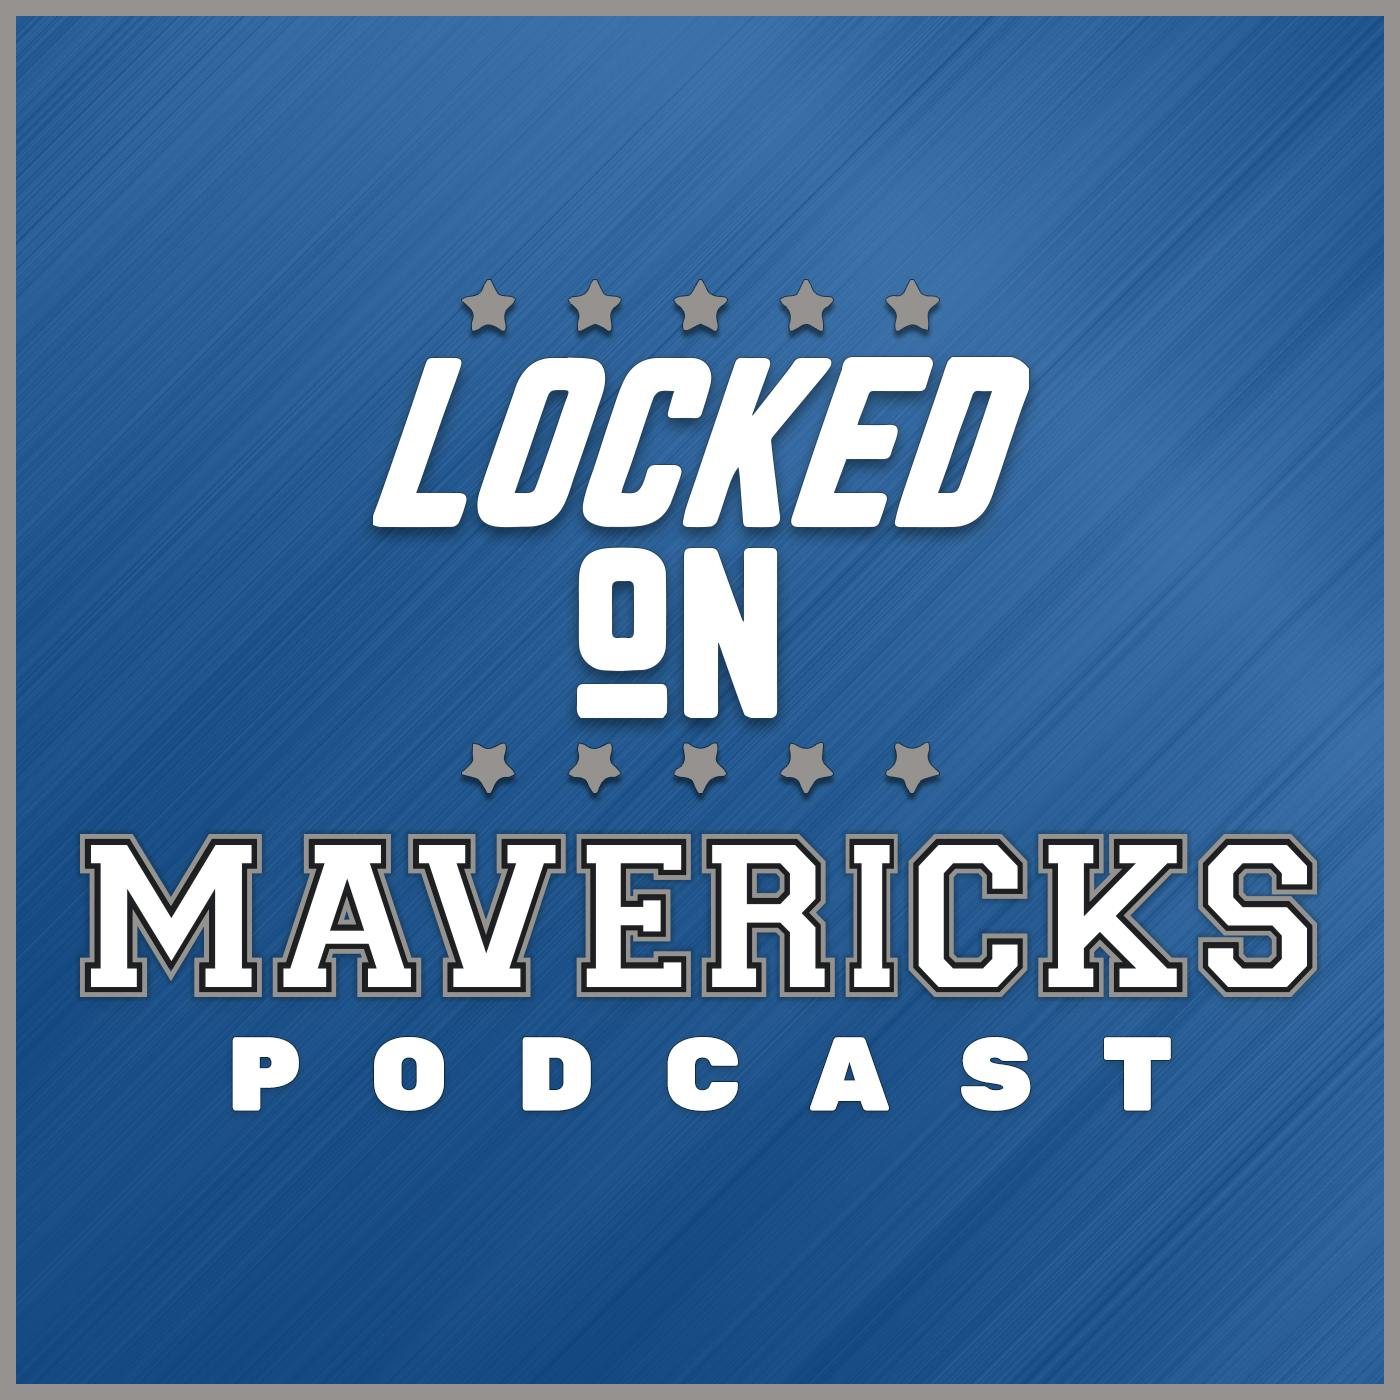 Locked On Mavericks podcast